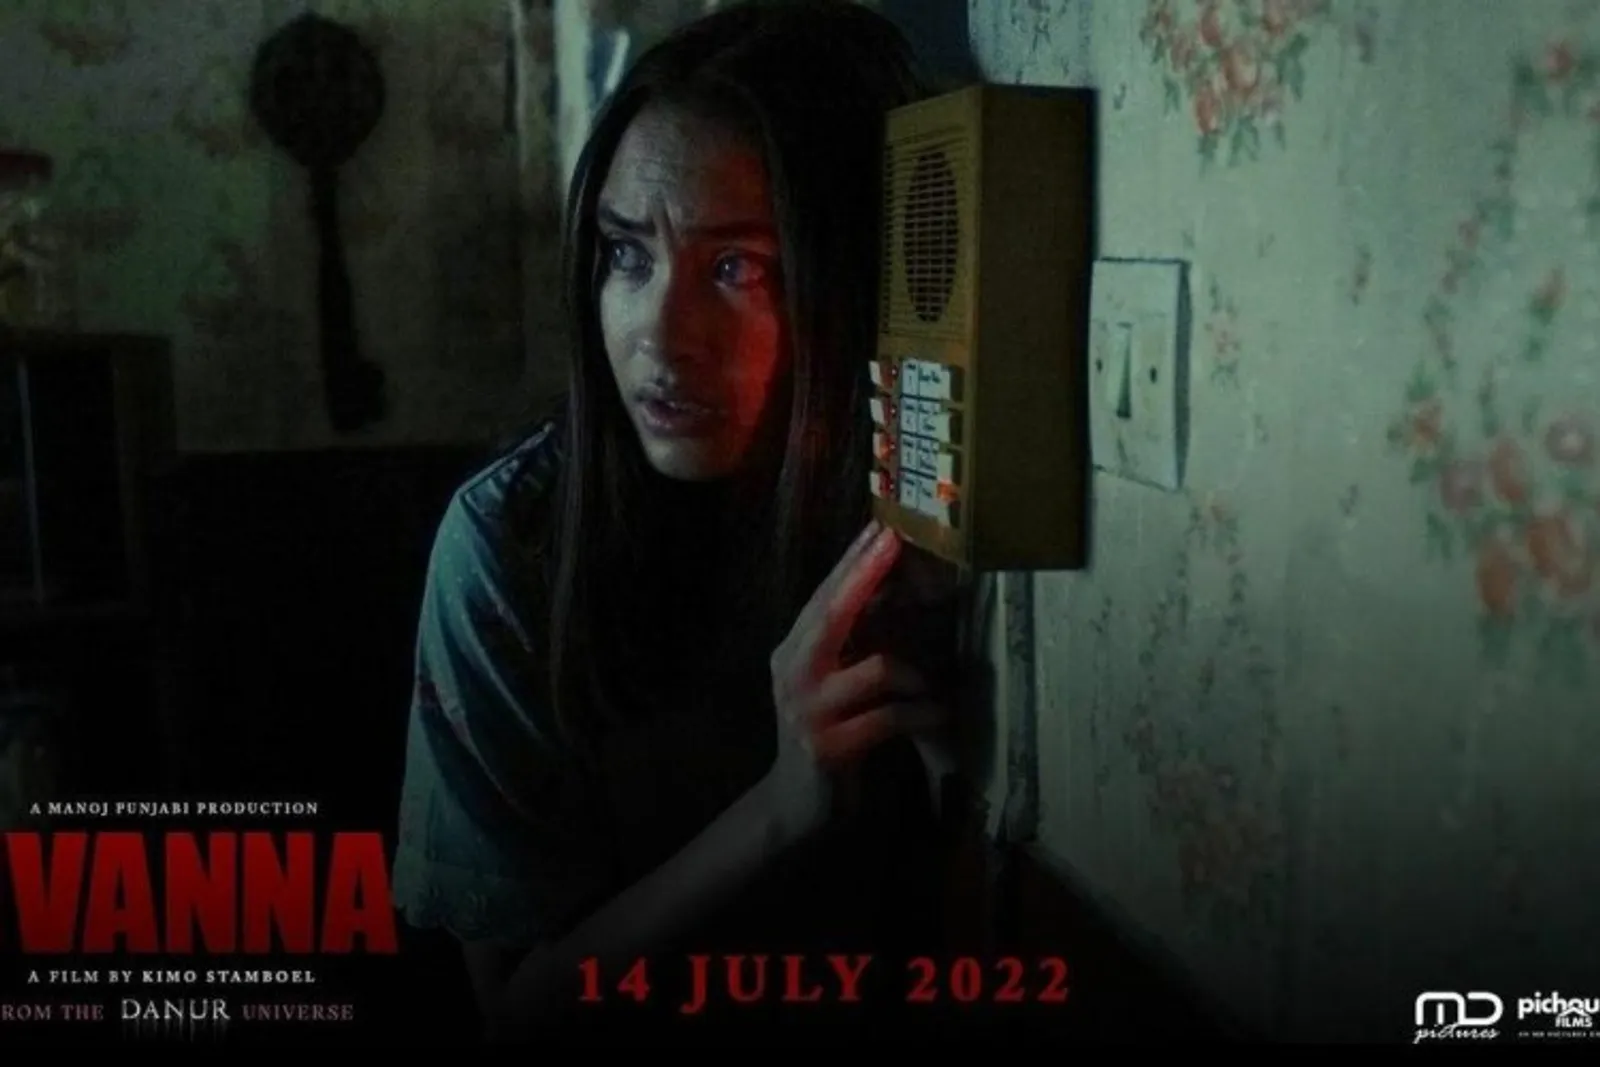 Tembus 1 Juta Penonton, Berikut 7 Fakta Film 'Ivanna'